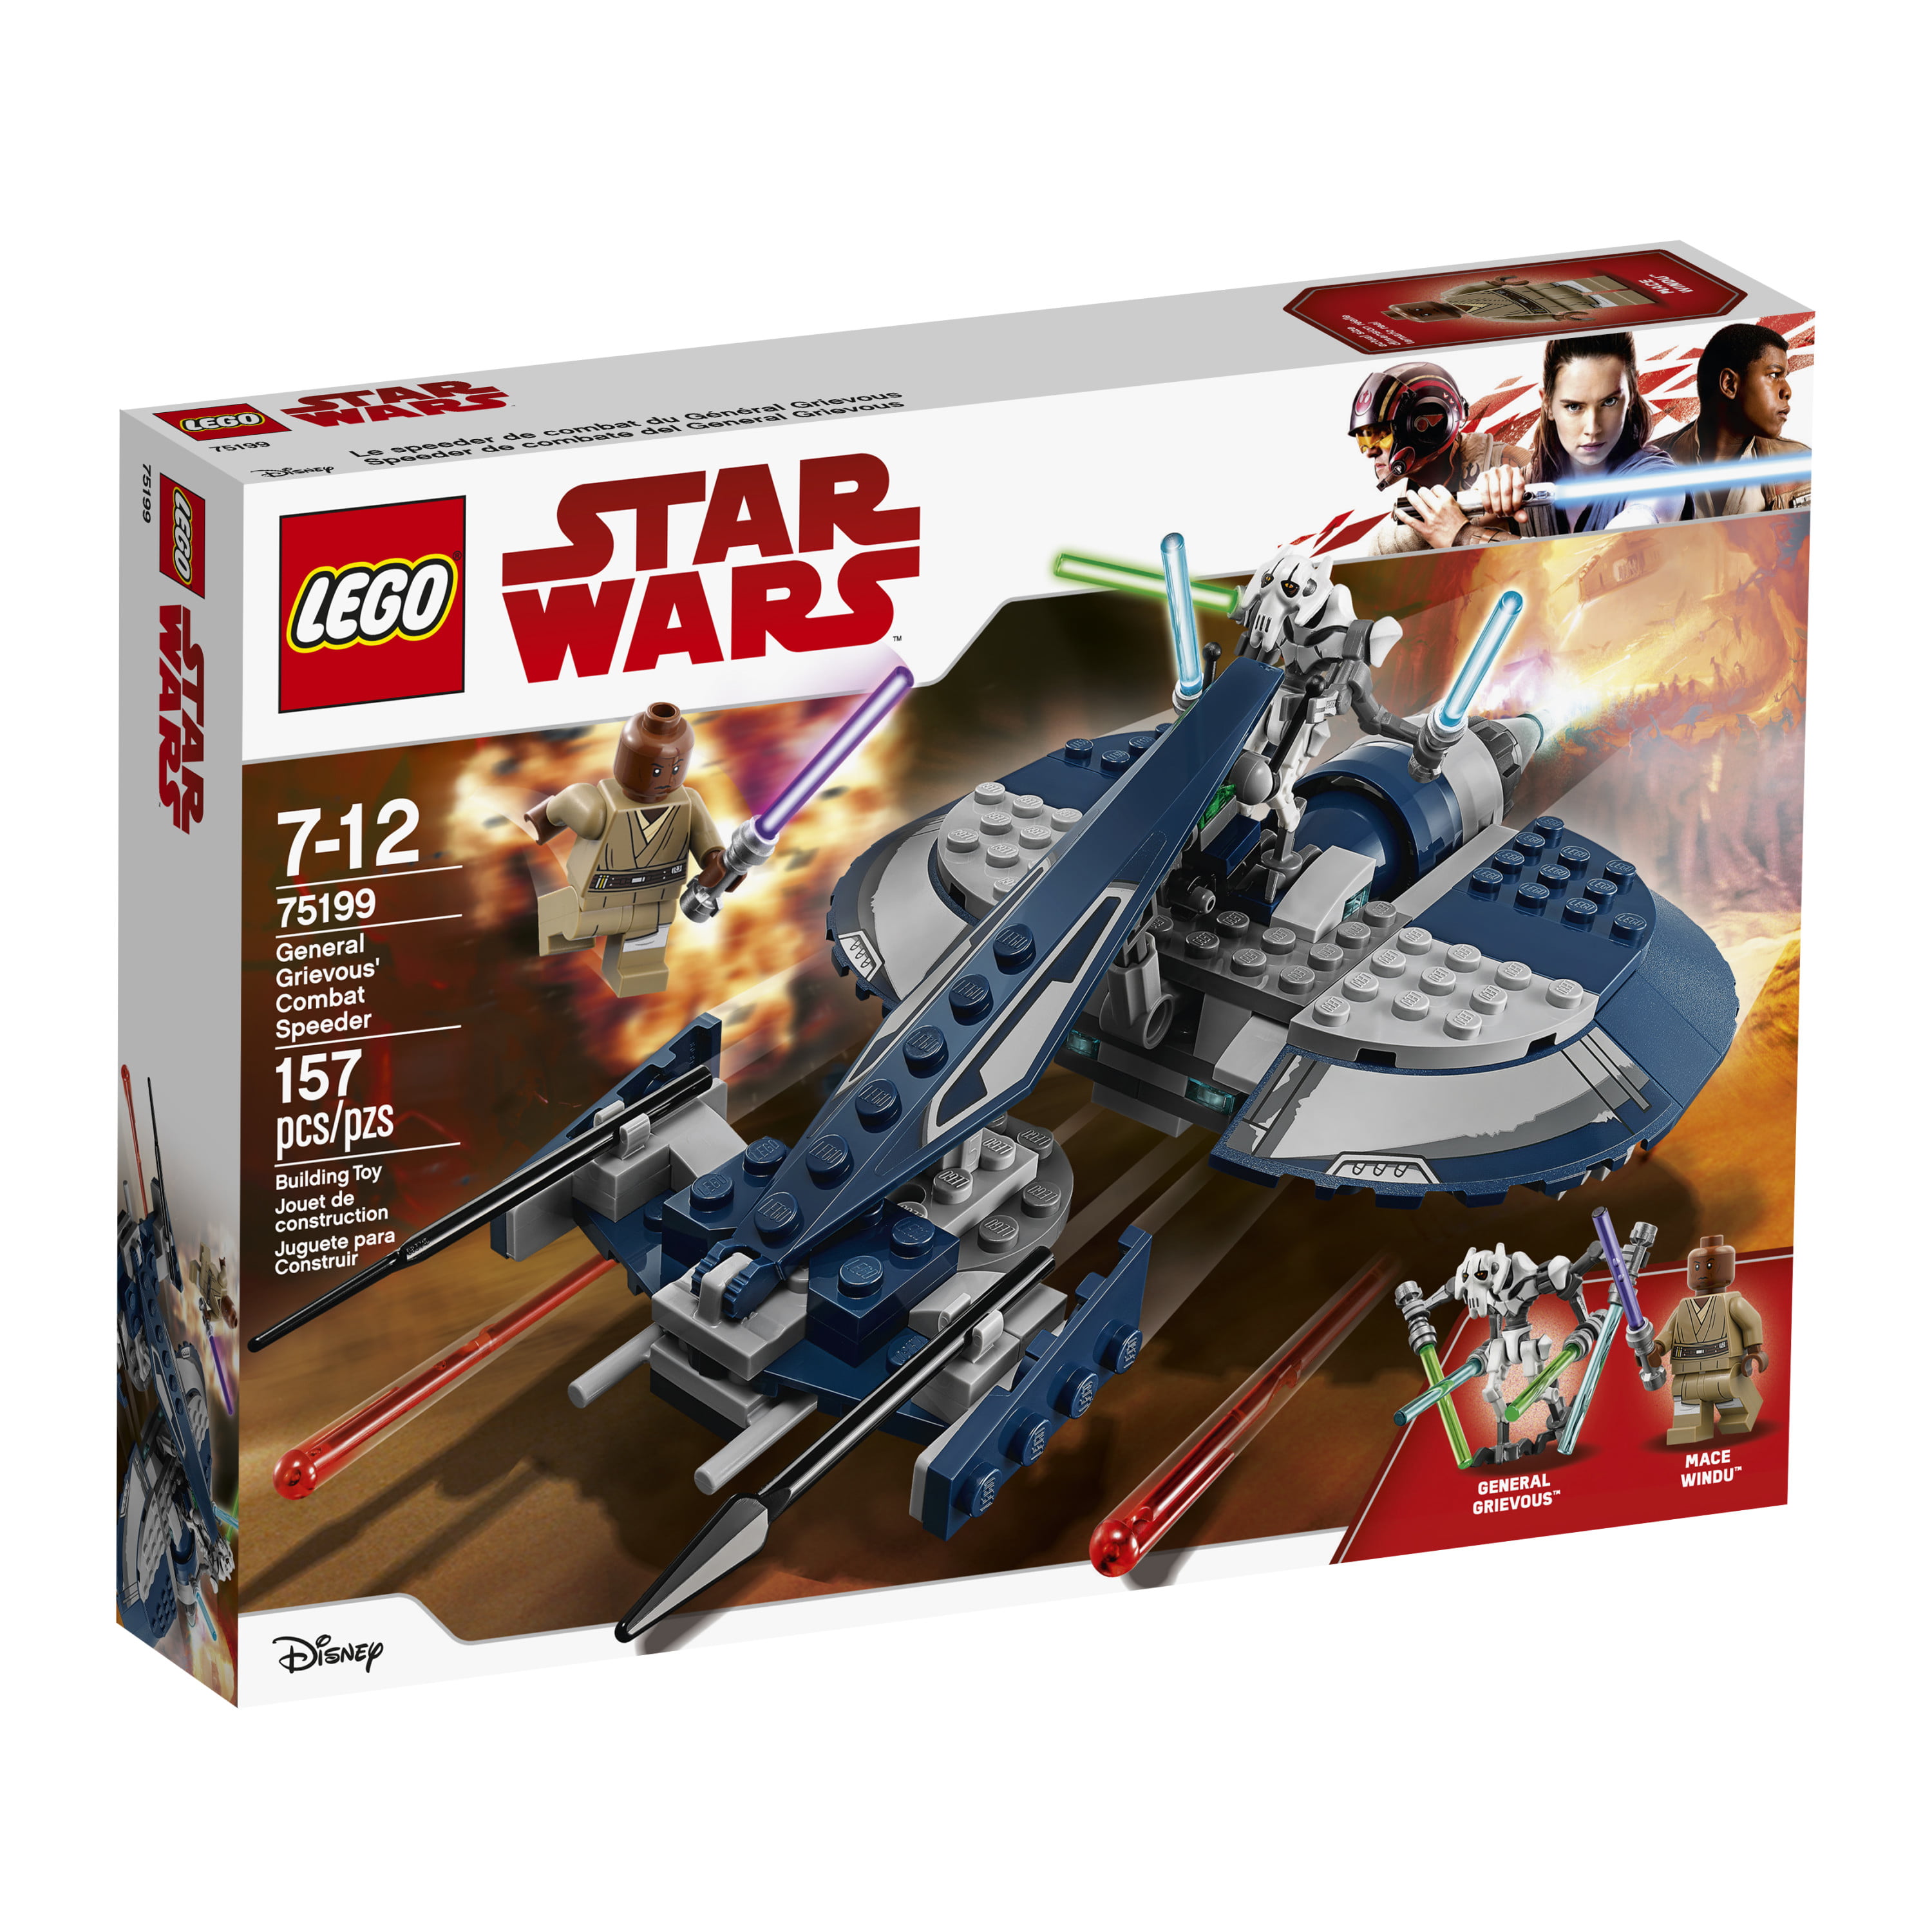 LEGO Wars General Grievous' Combat Speeder Ship Building Set 75199 - Walmart.com